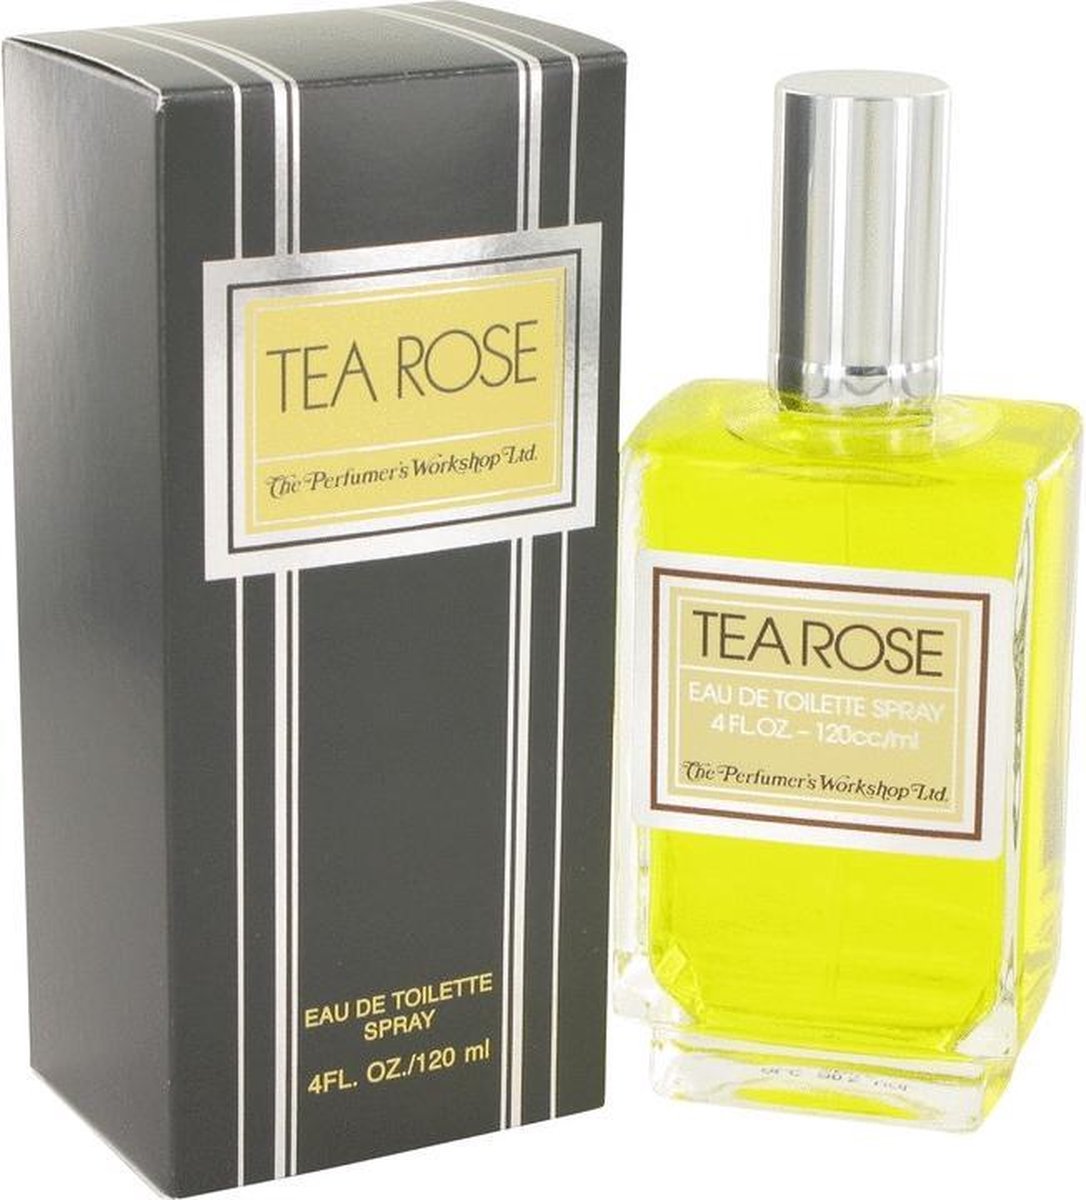 TEA ROSE by Perfumers Workshop 120 ml - Eau De Toilette Spray